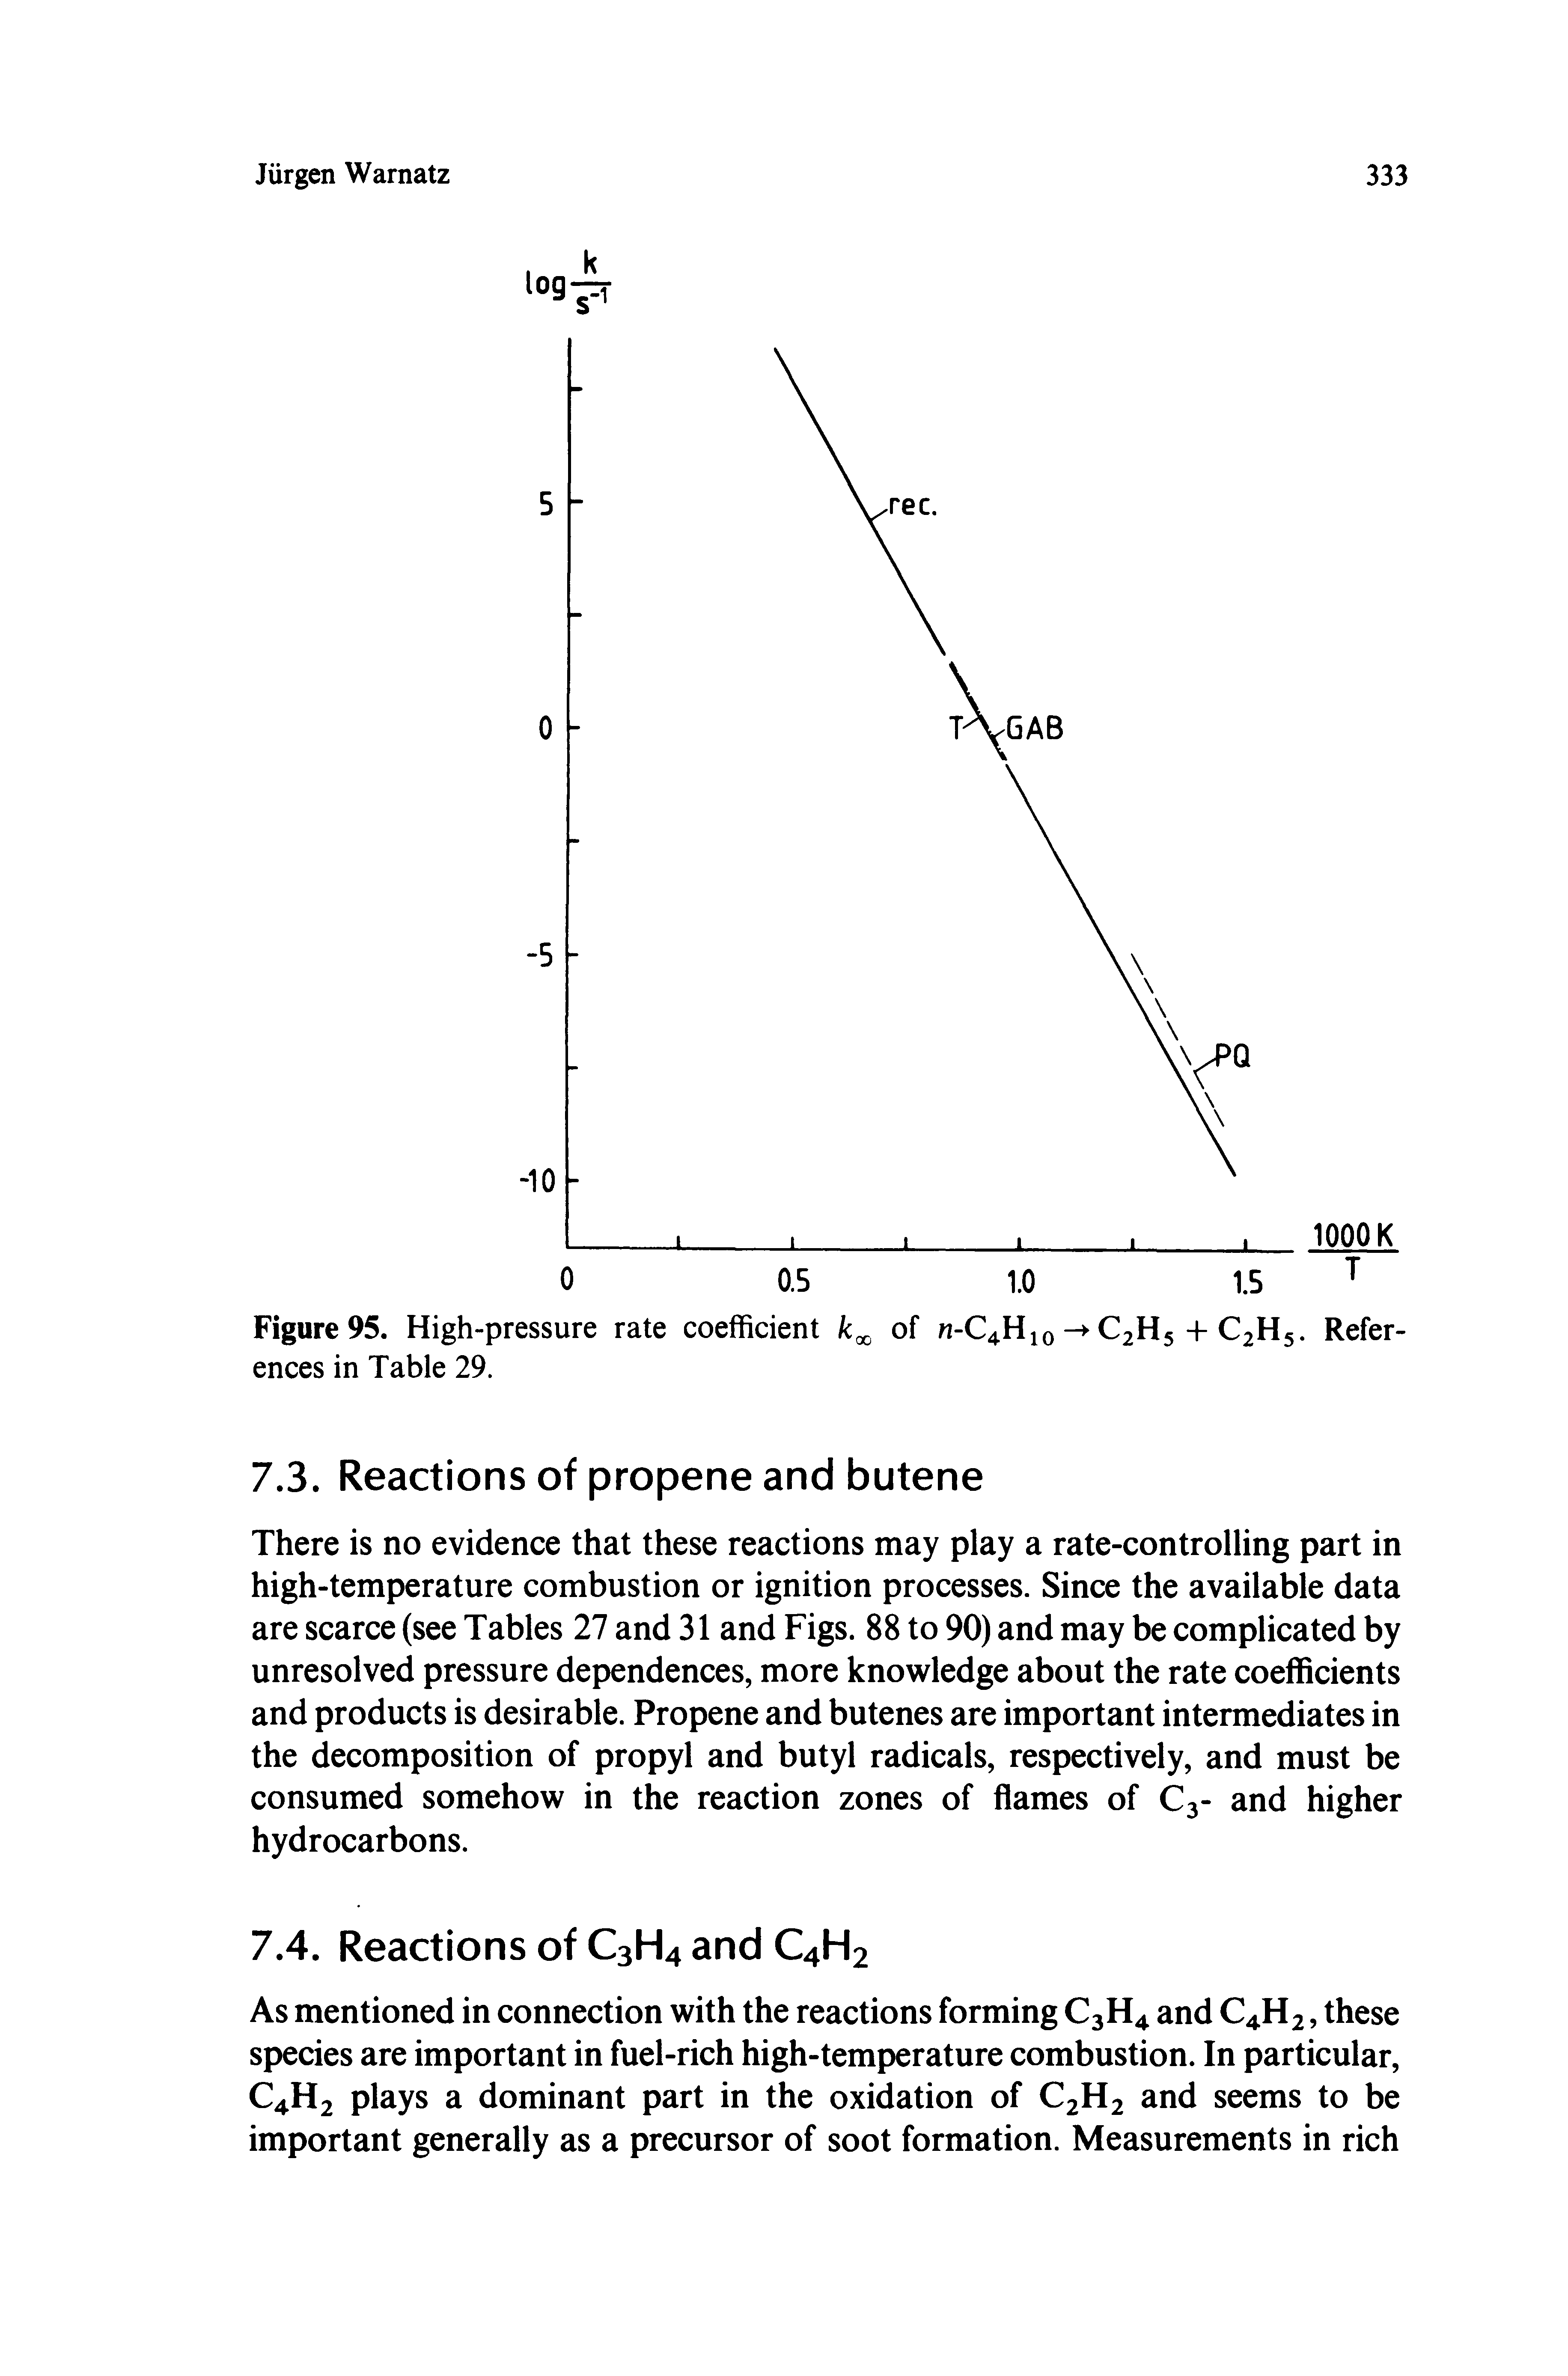 Figure 95. High-pressure rate coefficient of n-CJiiQ-ences in Table 29.